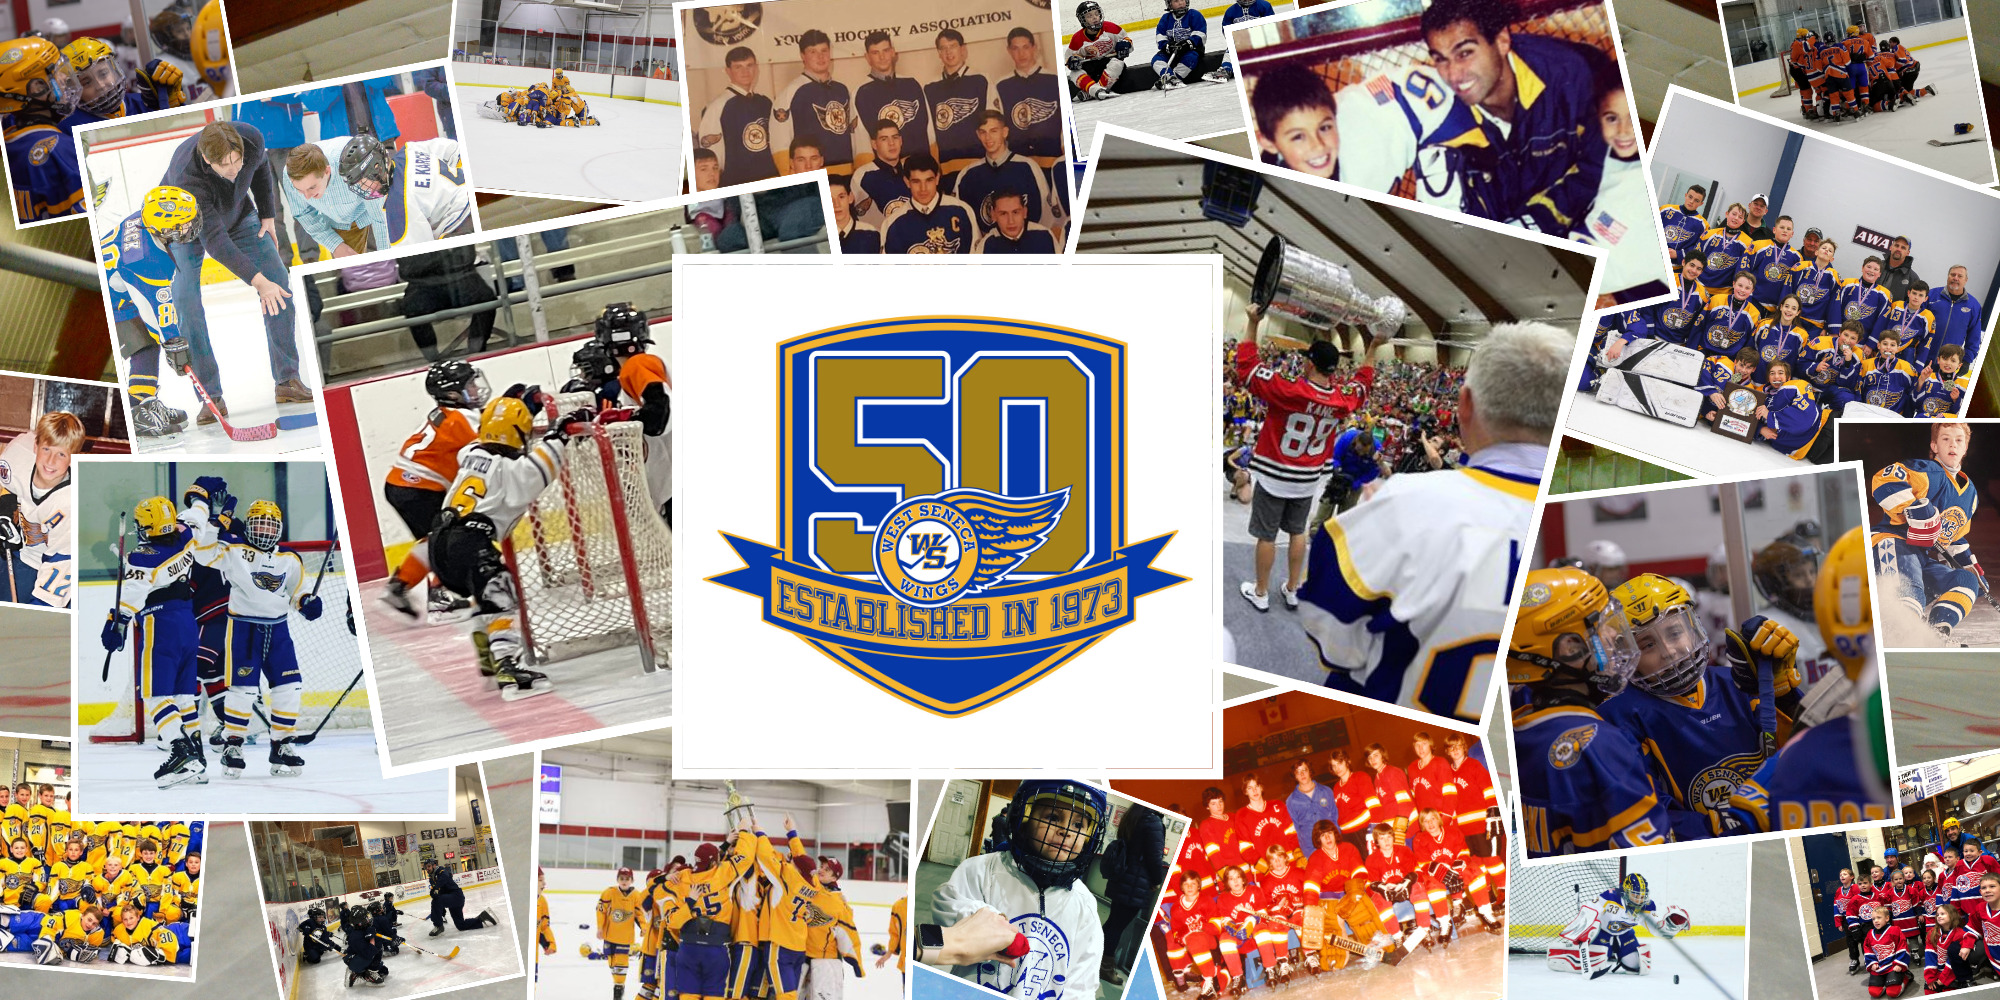 50 Years of West Seneca Hockey